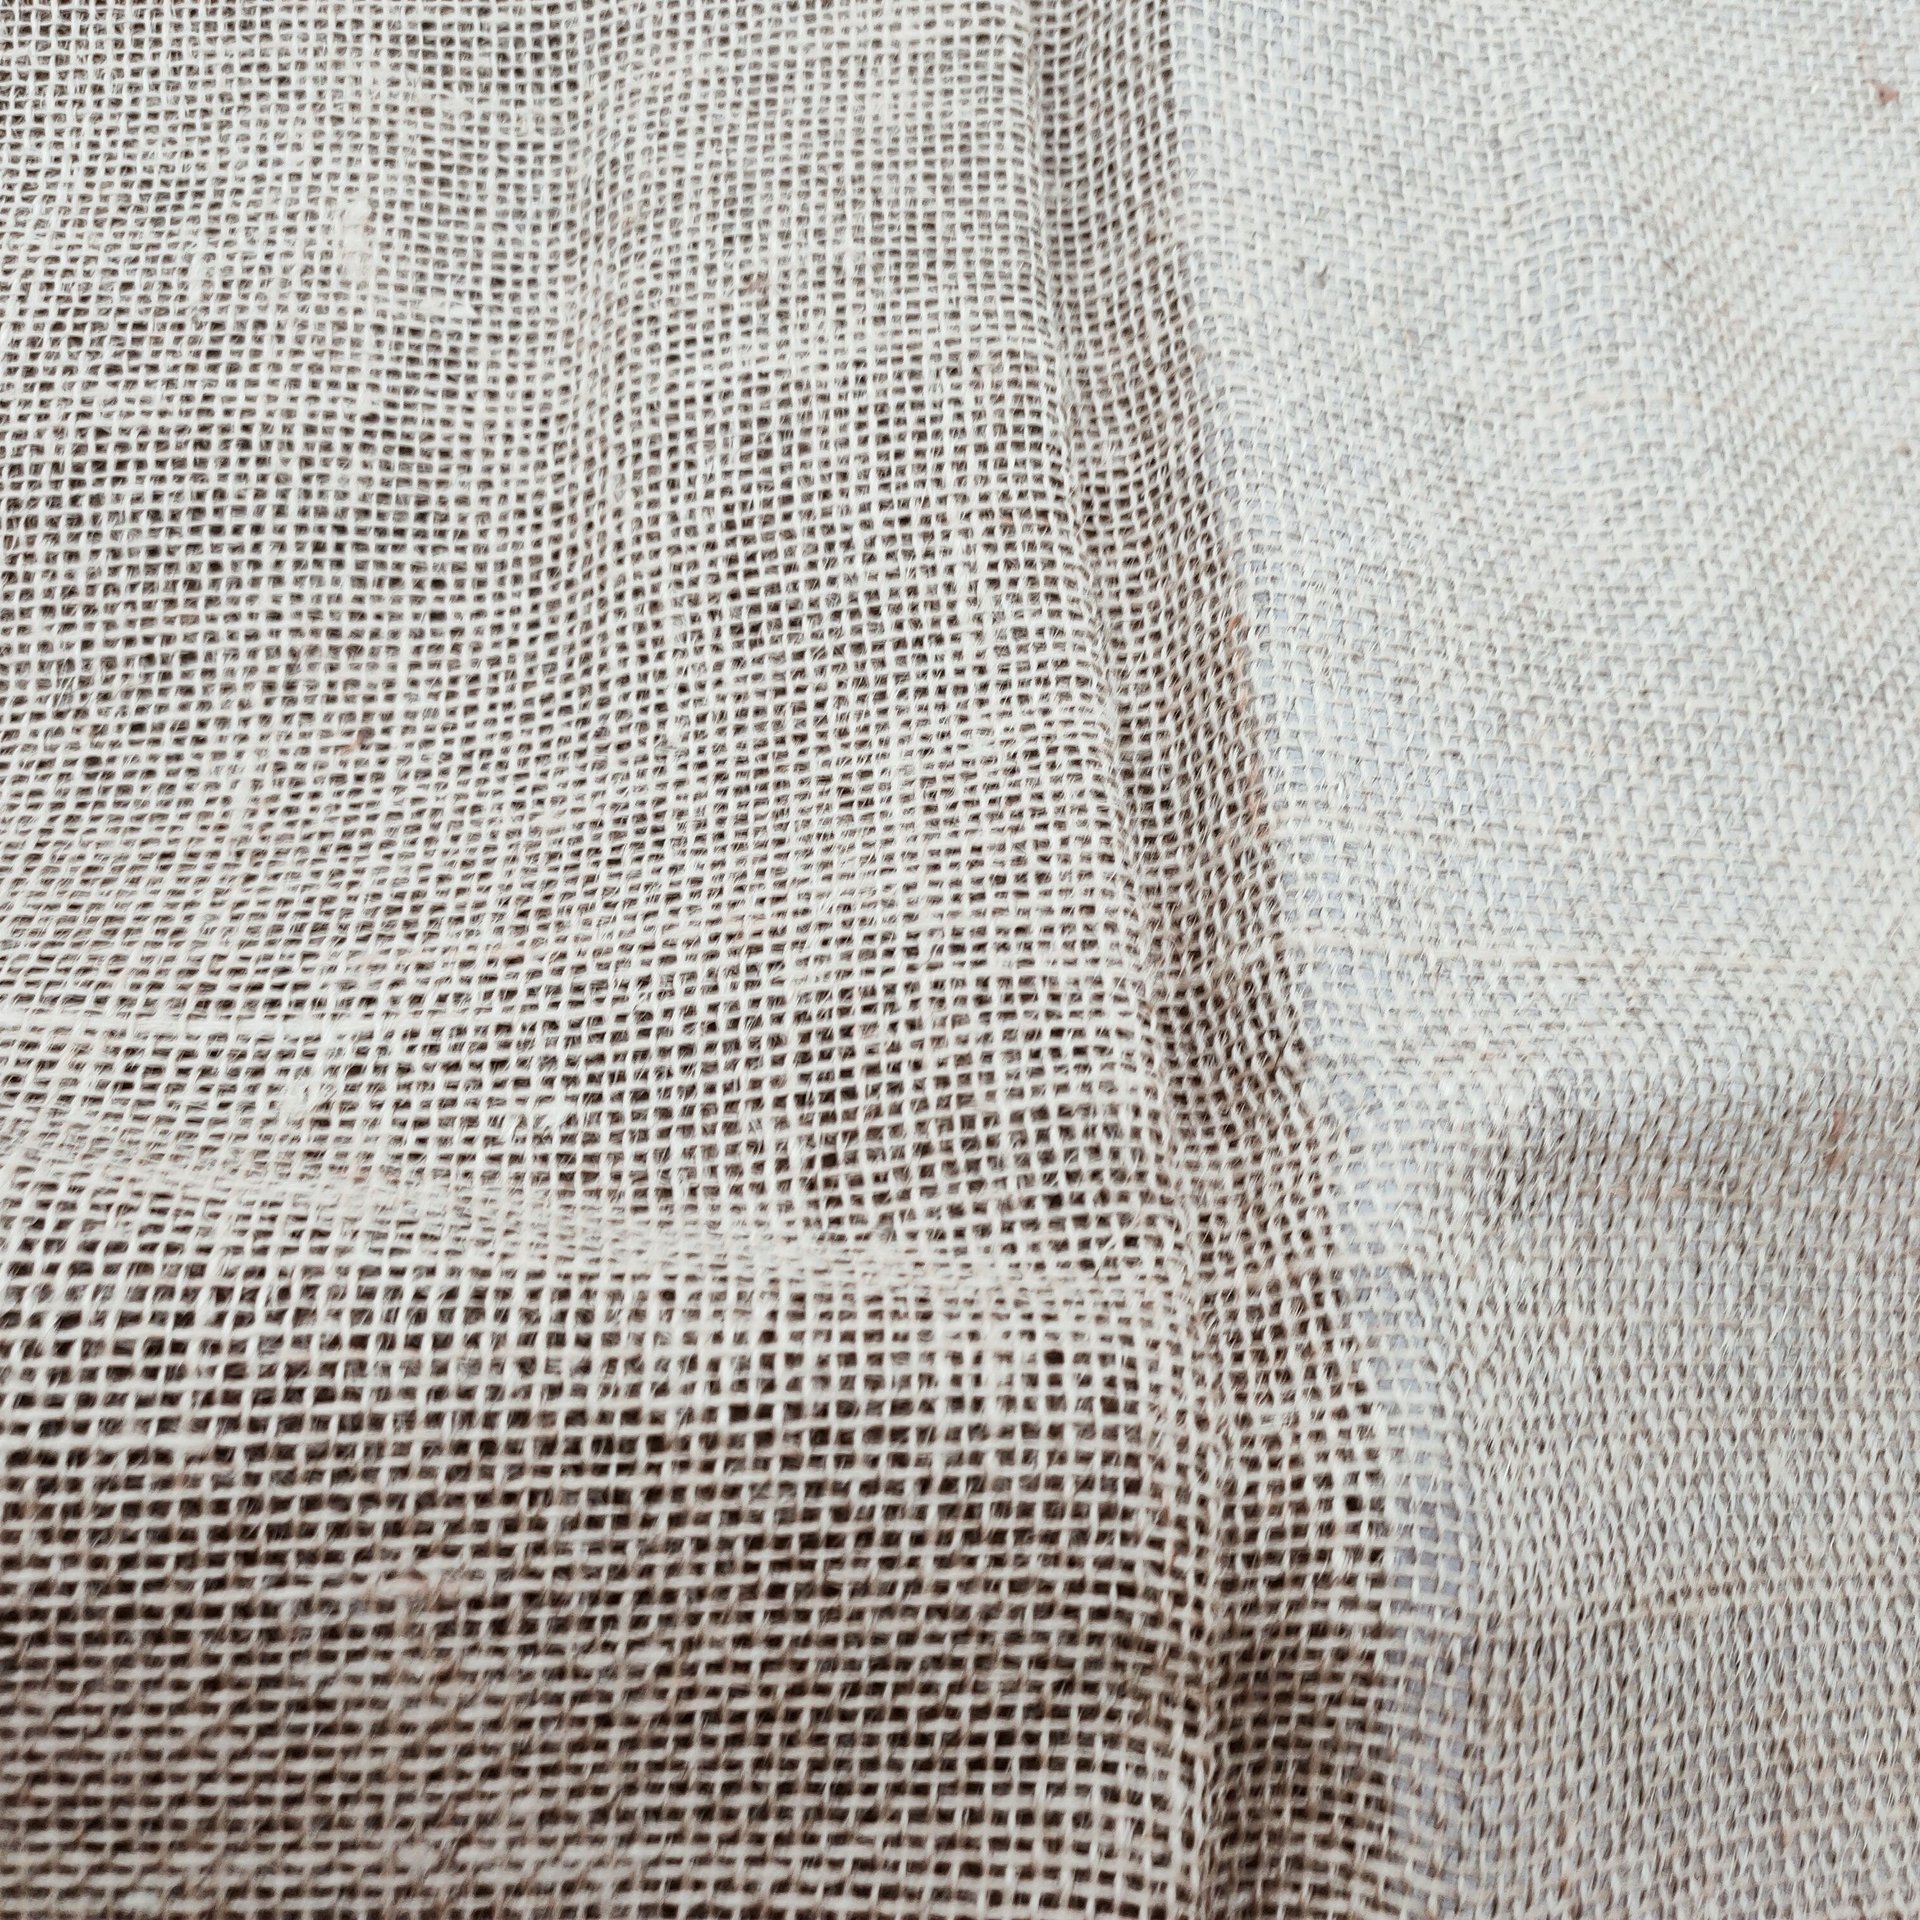 Eco Friendly Camo Burlap Print Jute Fabric Net